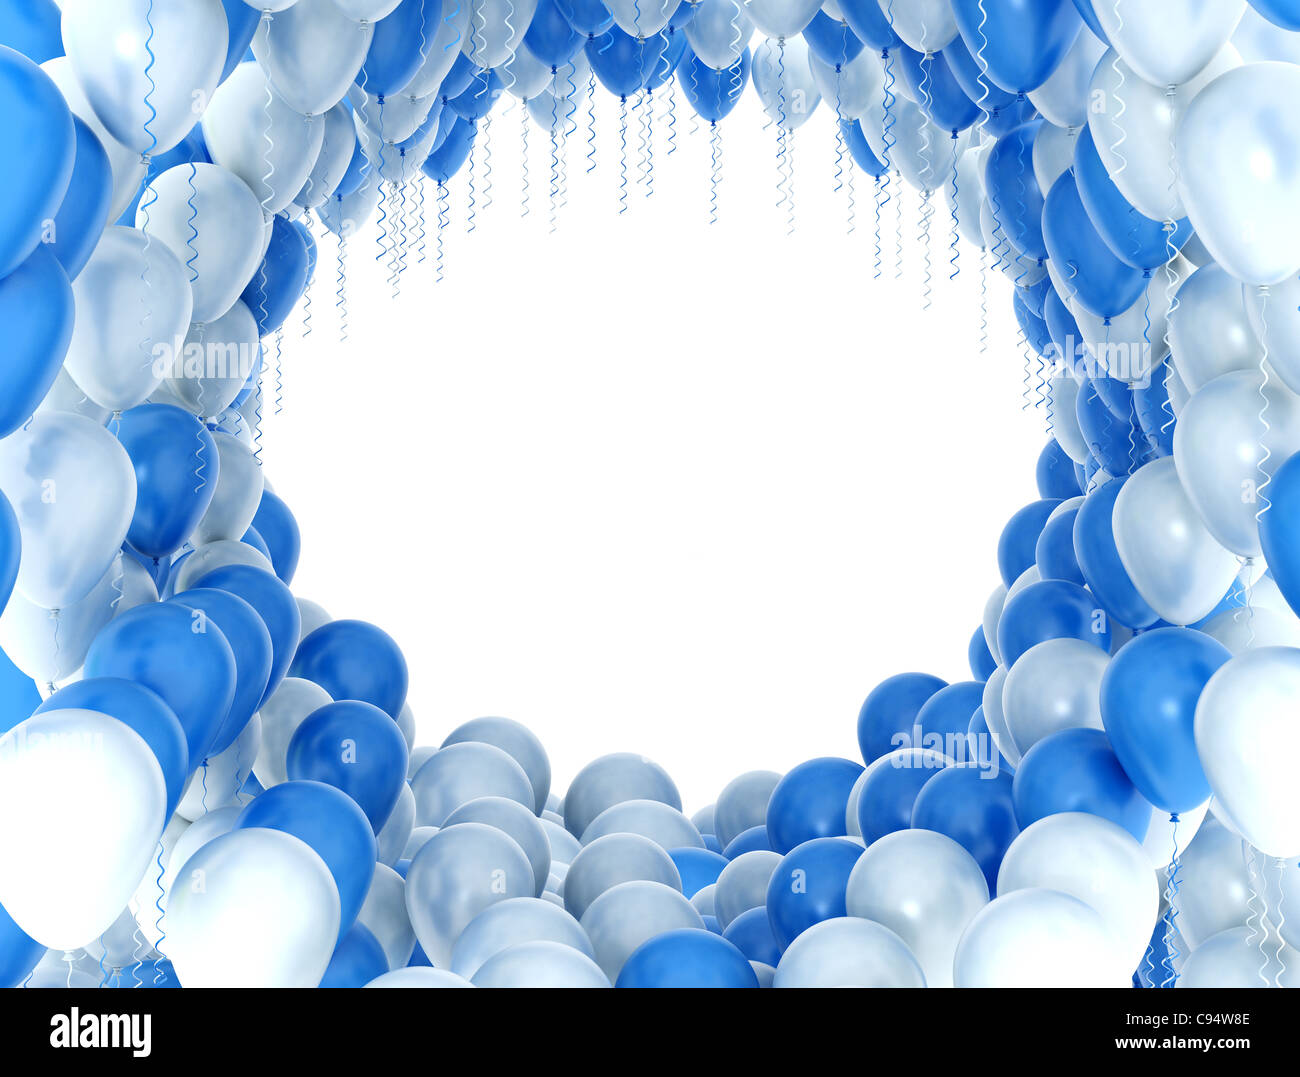 Celebration background blue and white balloons Stock Photo - Alamy